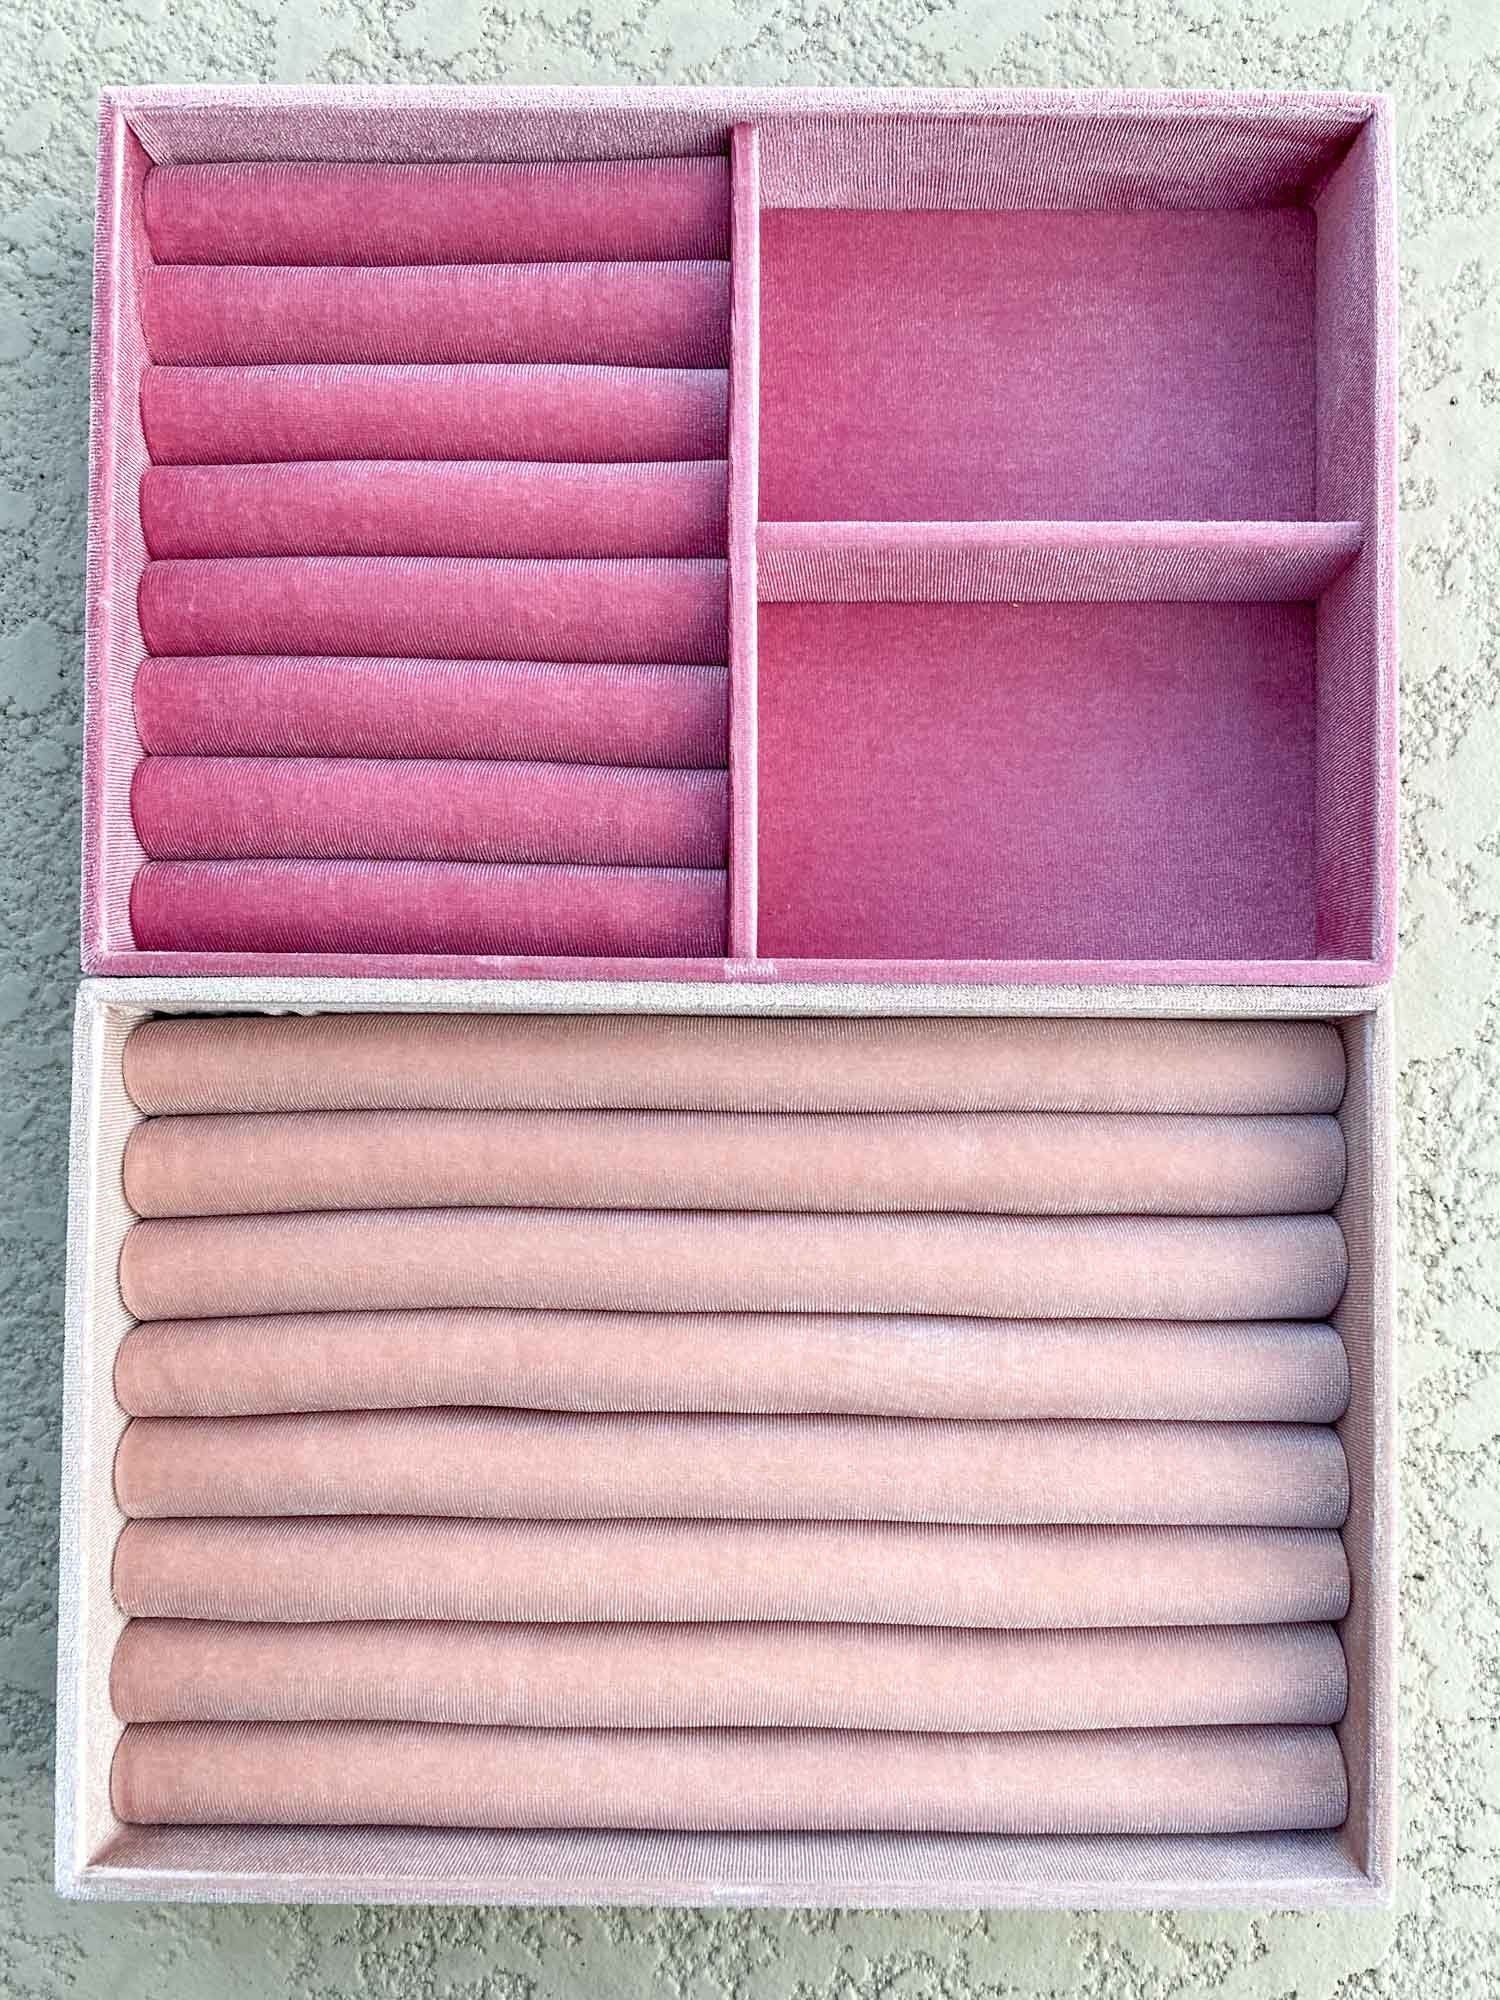 Aurora Designer - Large Multi-Ring Luxurious Velvet Jewelry Ring Box Tray  Display Case Birthday Gift for Her Multiple Row Rings Soft Light Dusty Pink  RB005 - Jo Dane